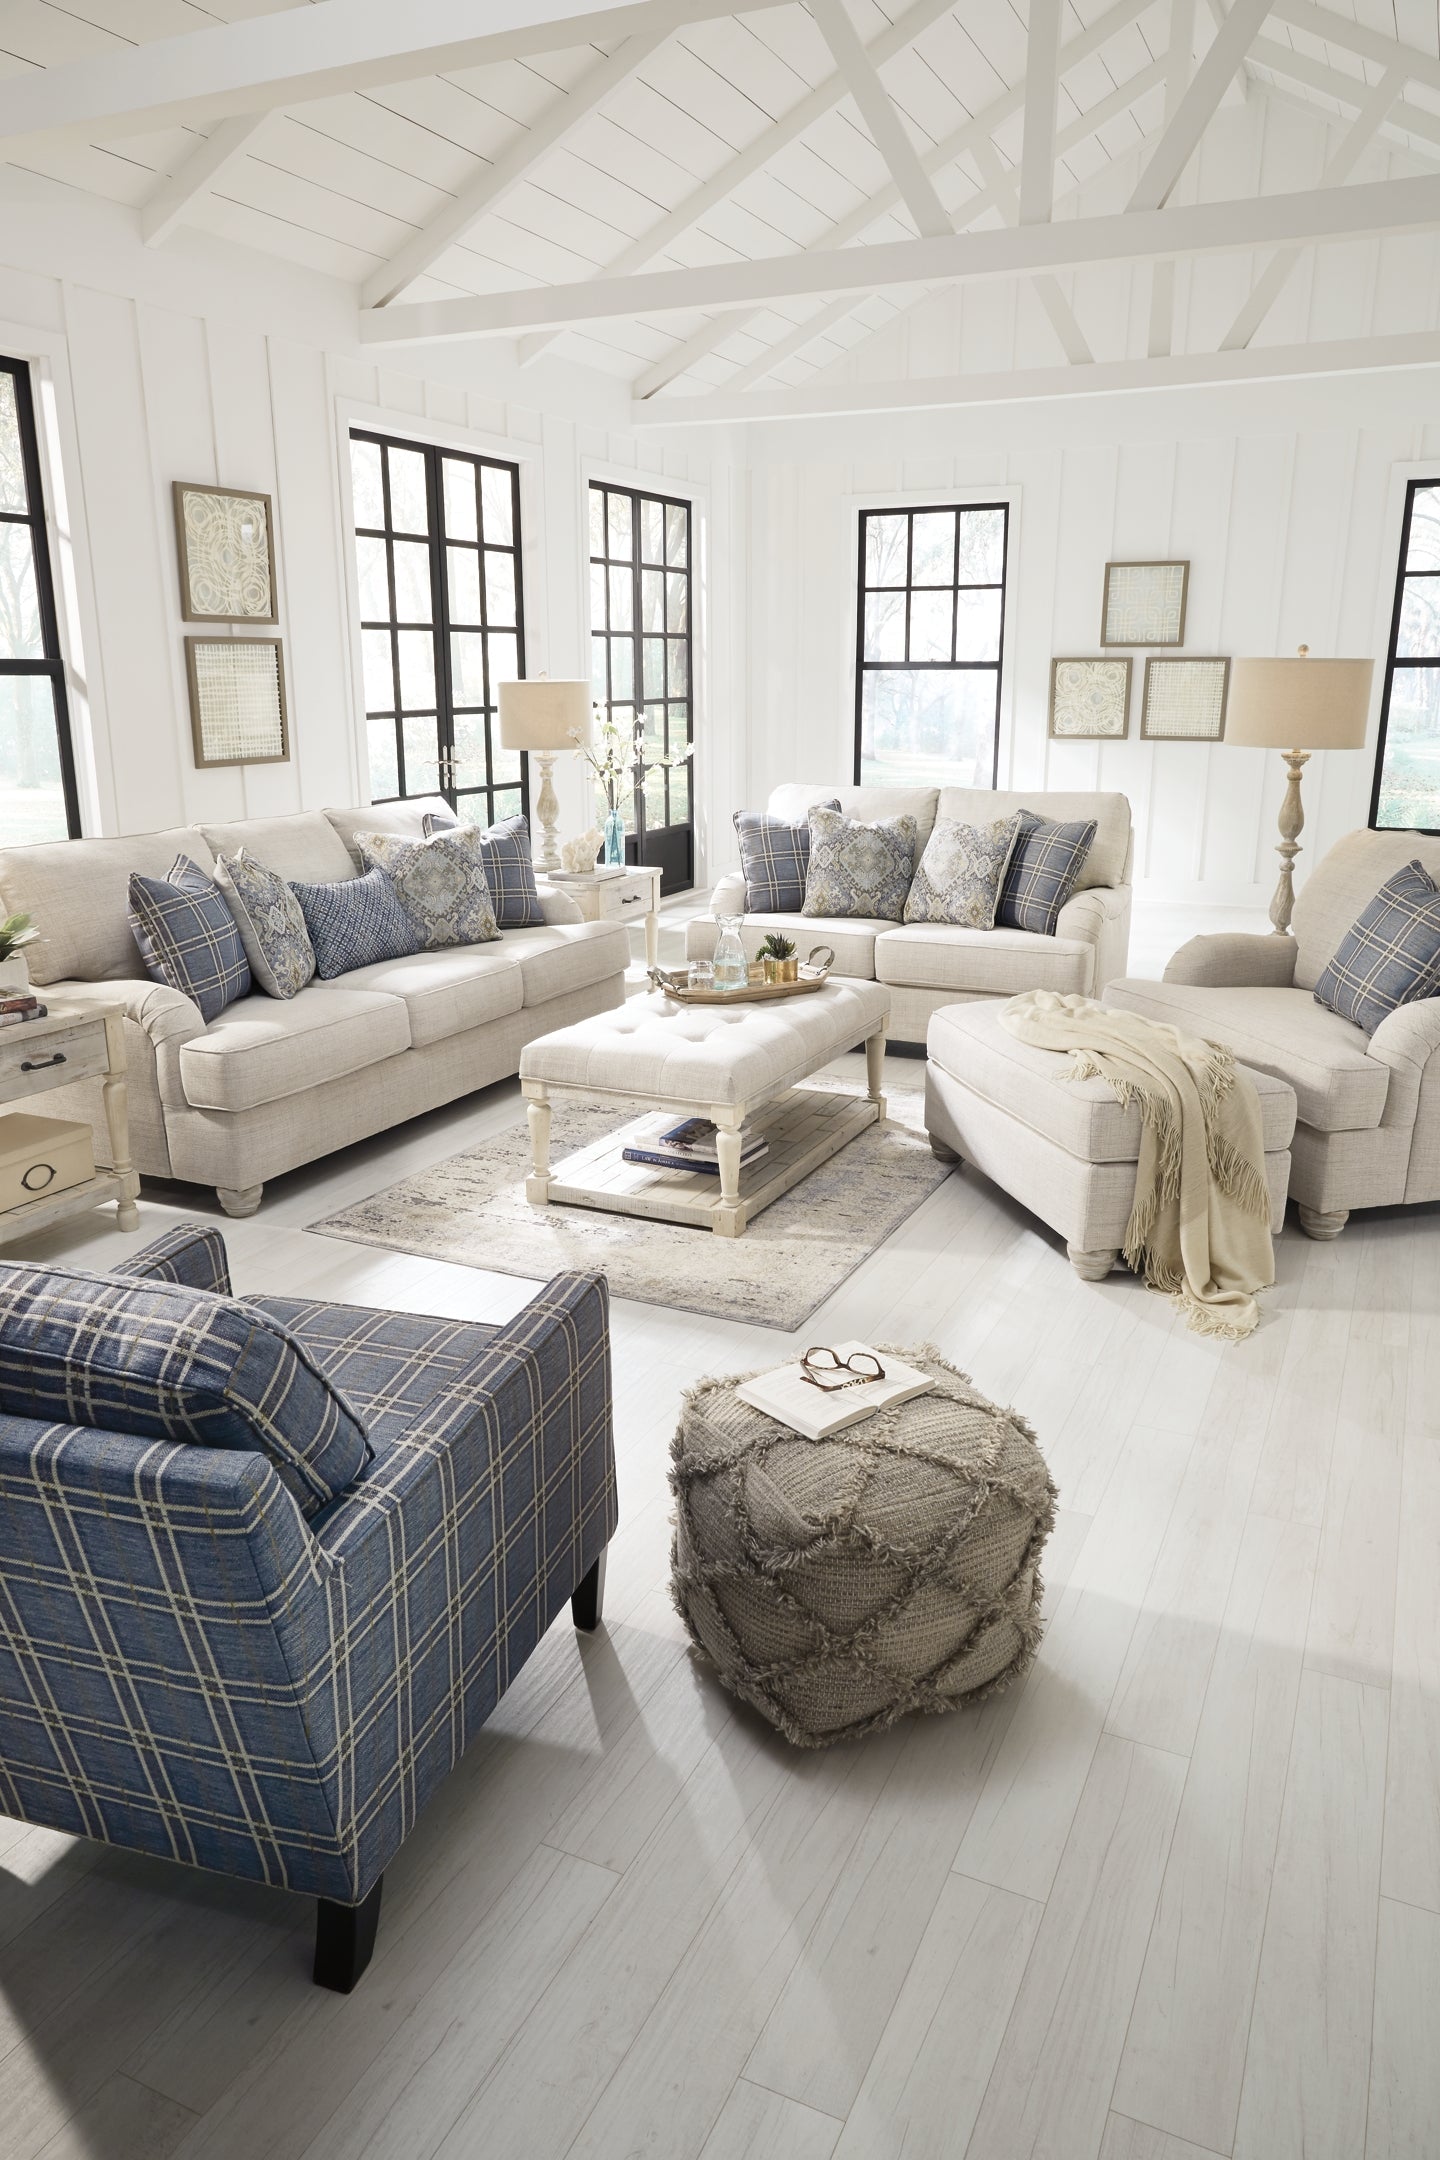 Traemore Sofa at Cloud 9 Mattress & Furniture furniture, home furnishing, home decor